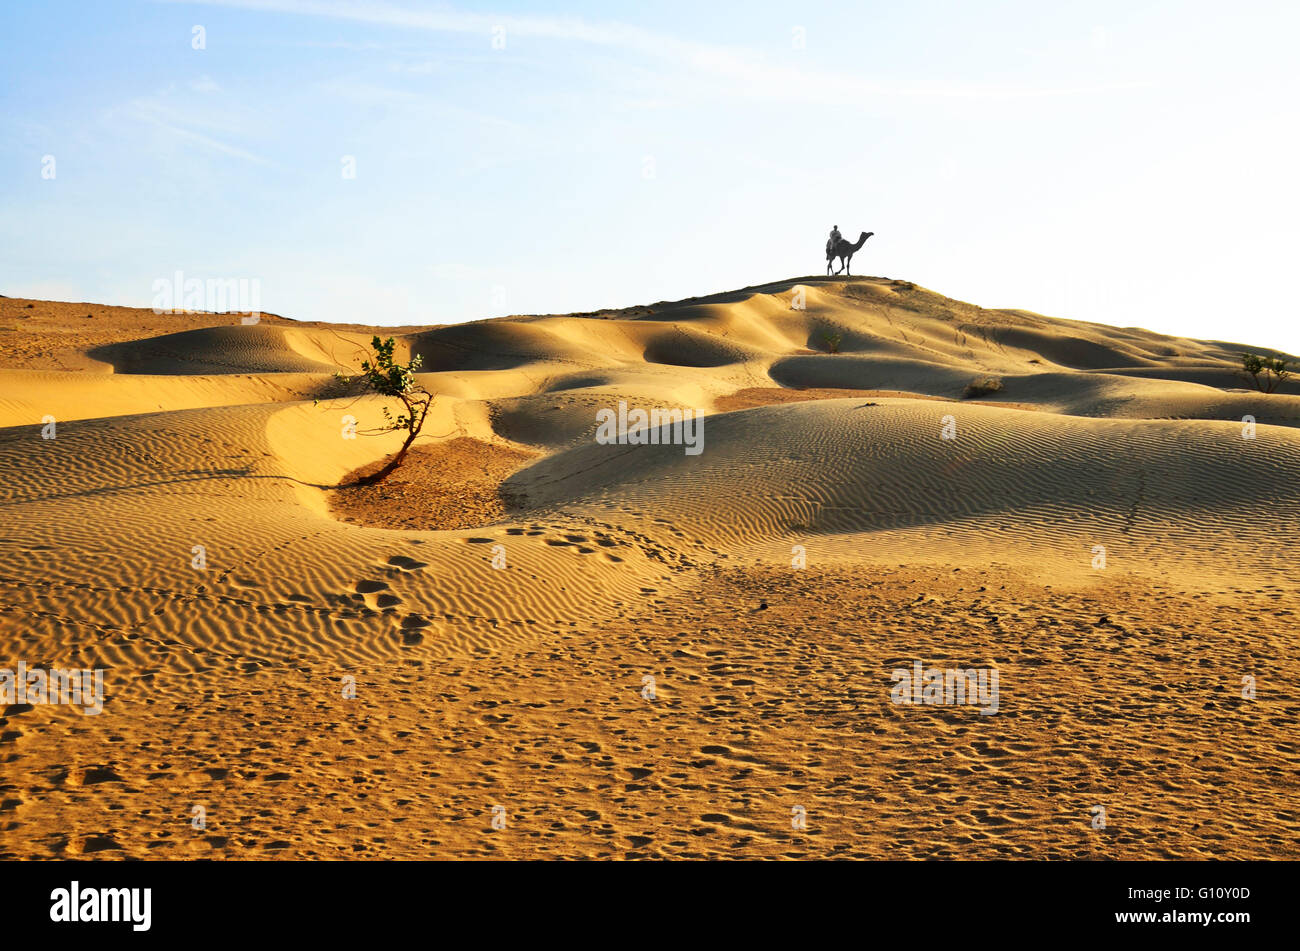 Nomads on camels over sand dunes, Thar desert, Rajasthan, India Stock Photo